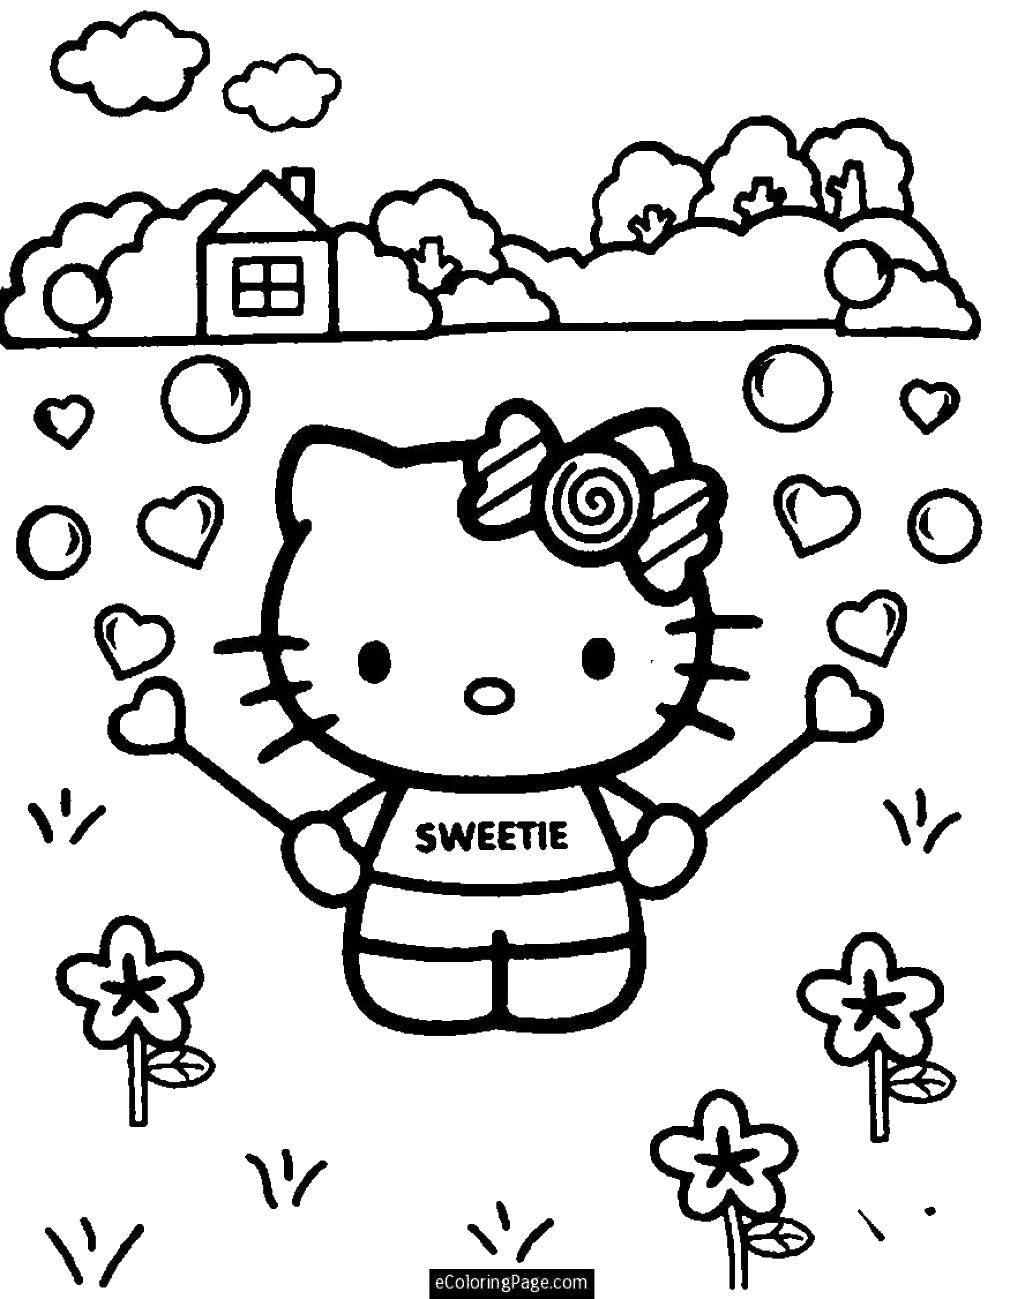 Название: Раскраска Hello kitty и сердечки. Категория: Hello Kitty. Теги: Hello Kitt, сердечки, пузыри, дом, деревья.